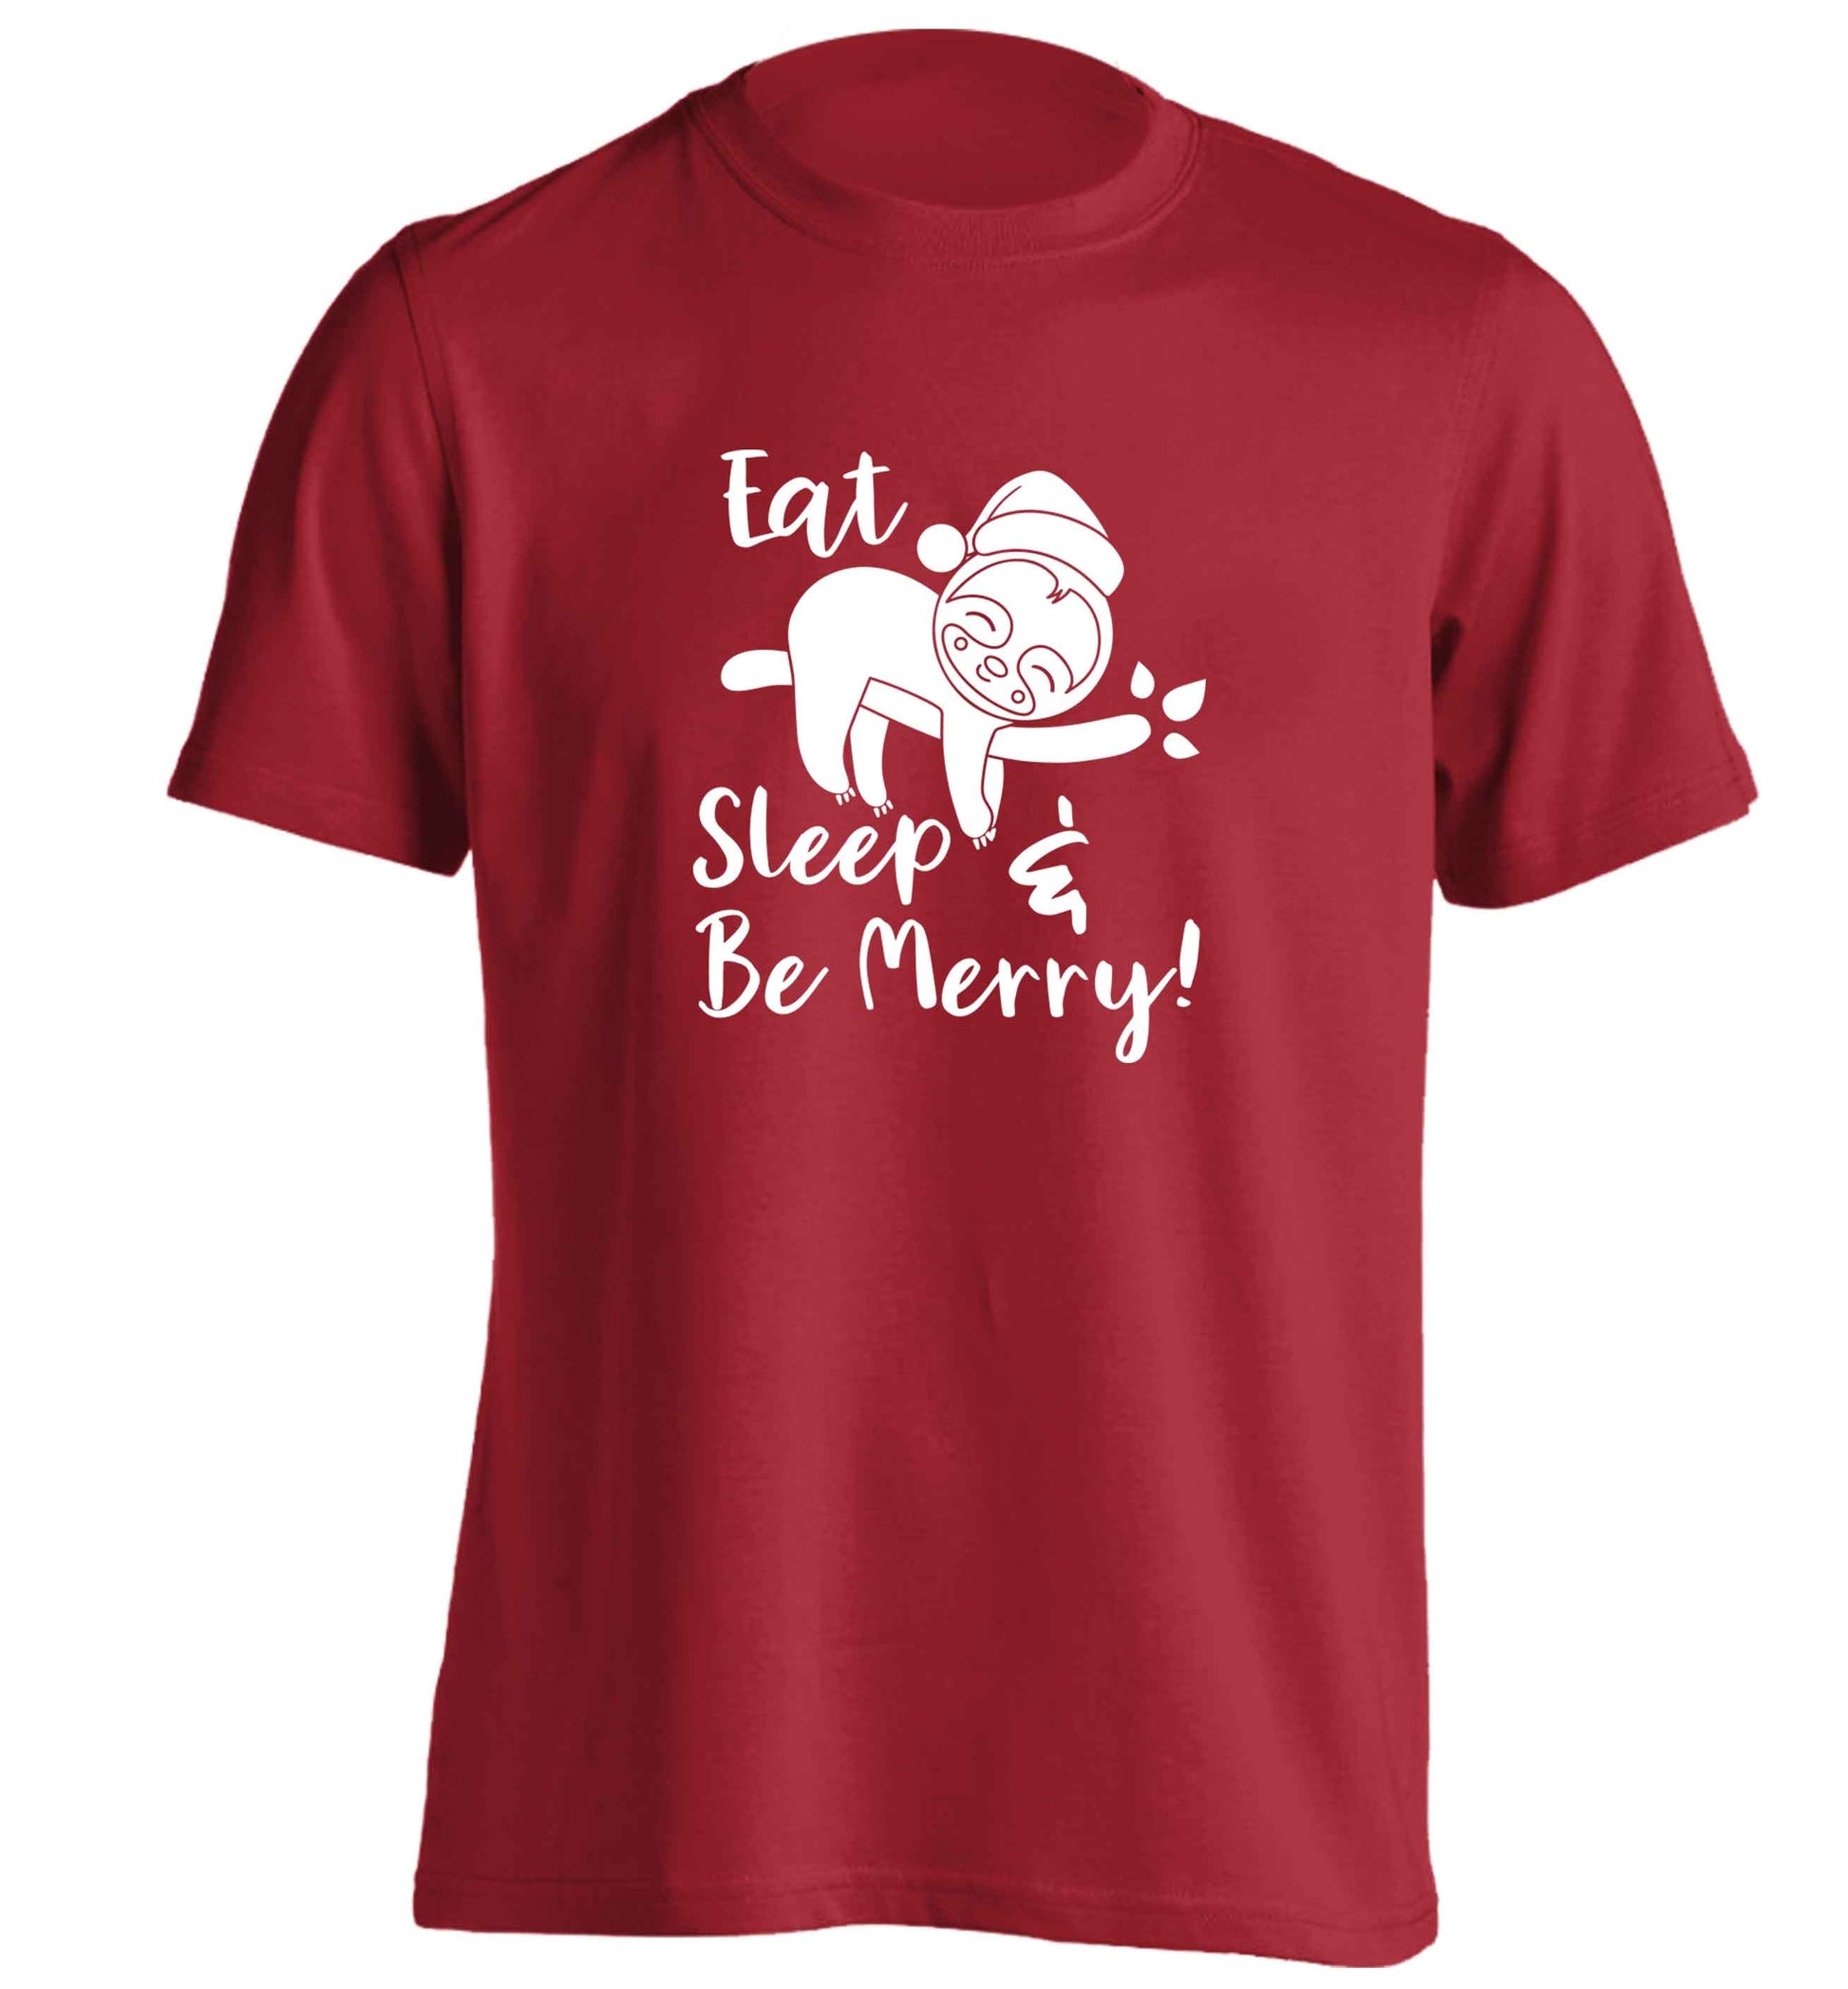 Merry Slothmas adults unisex red Tshirt 2XL